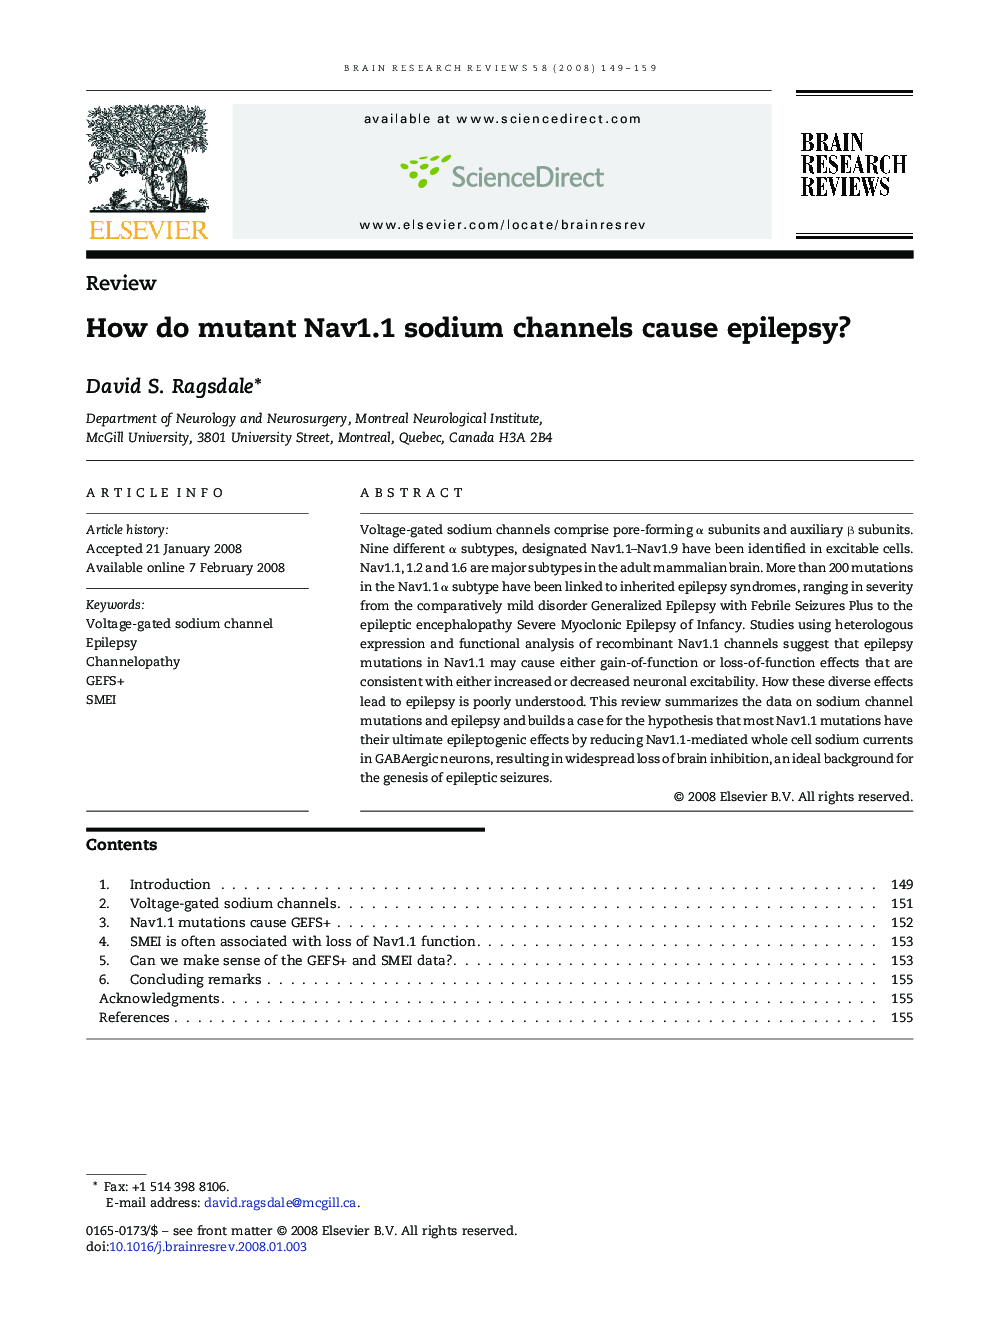 How do mutant Nav1.1 sodium channels cause epilepsy?